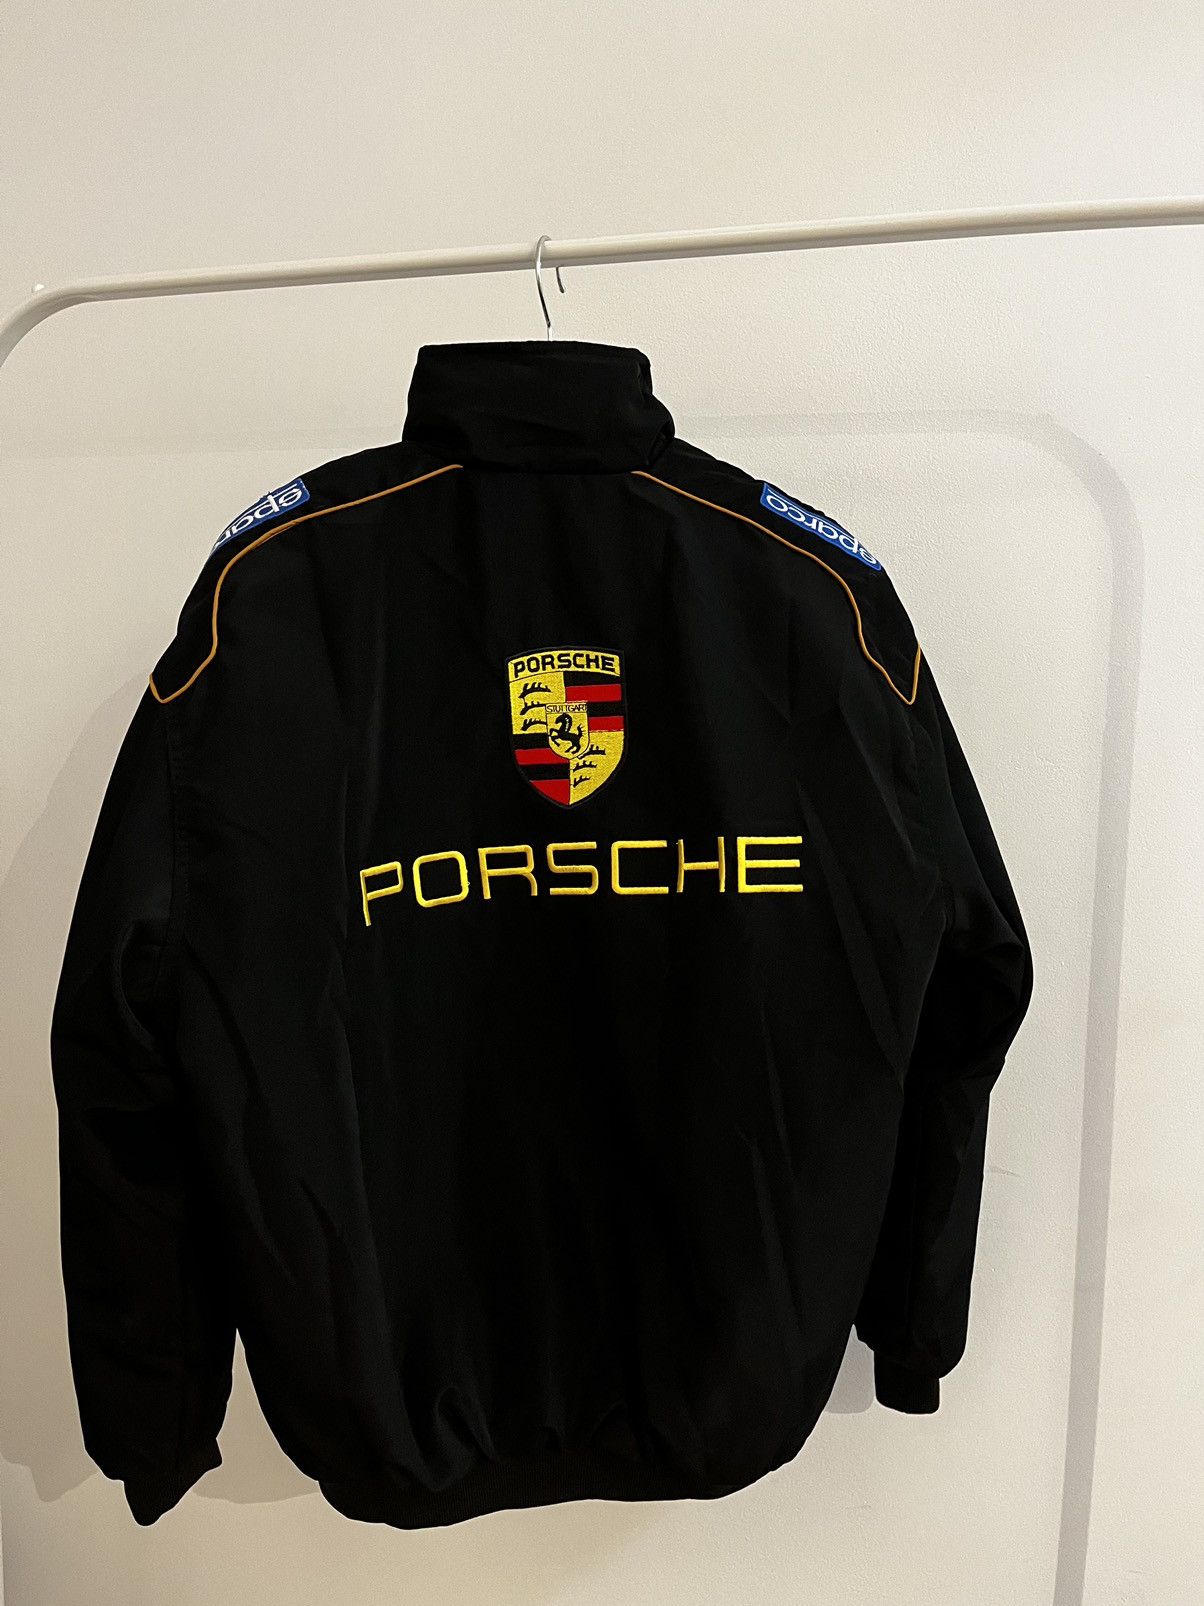 Porsche Design Porsche vintage racing jacket bomber | Grailed